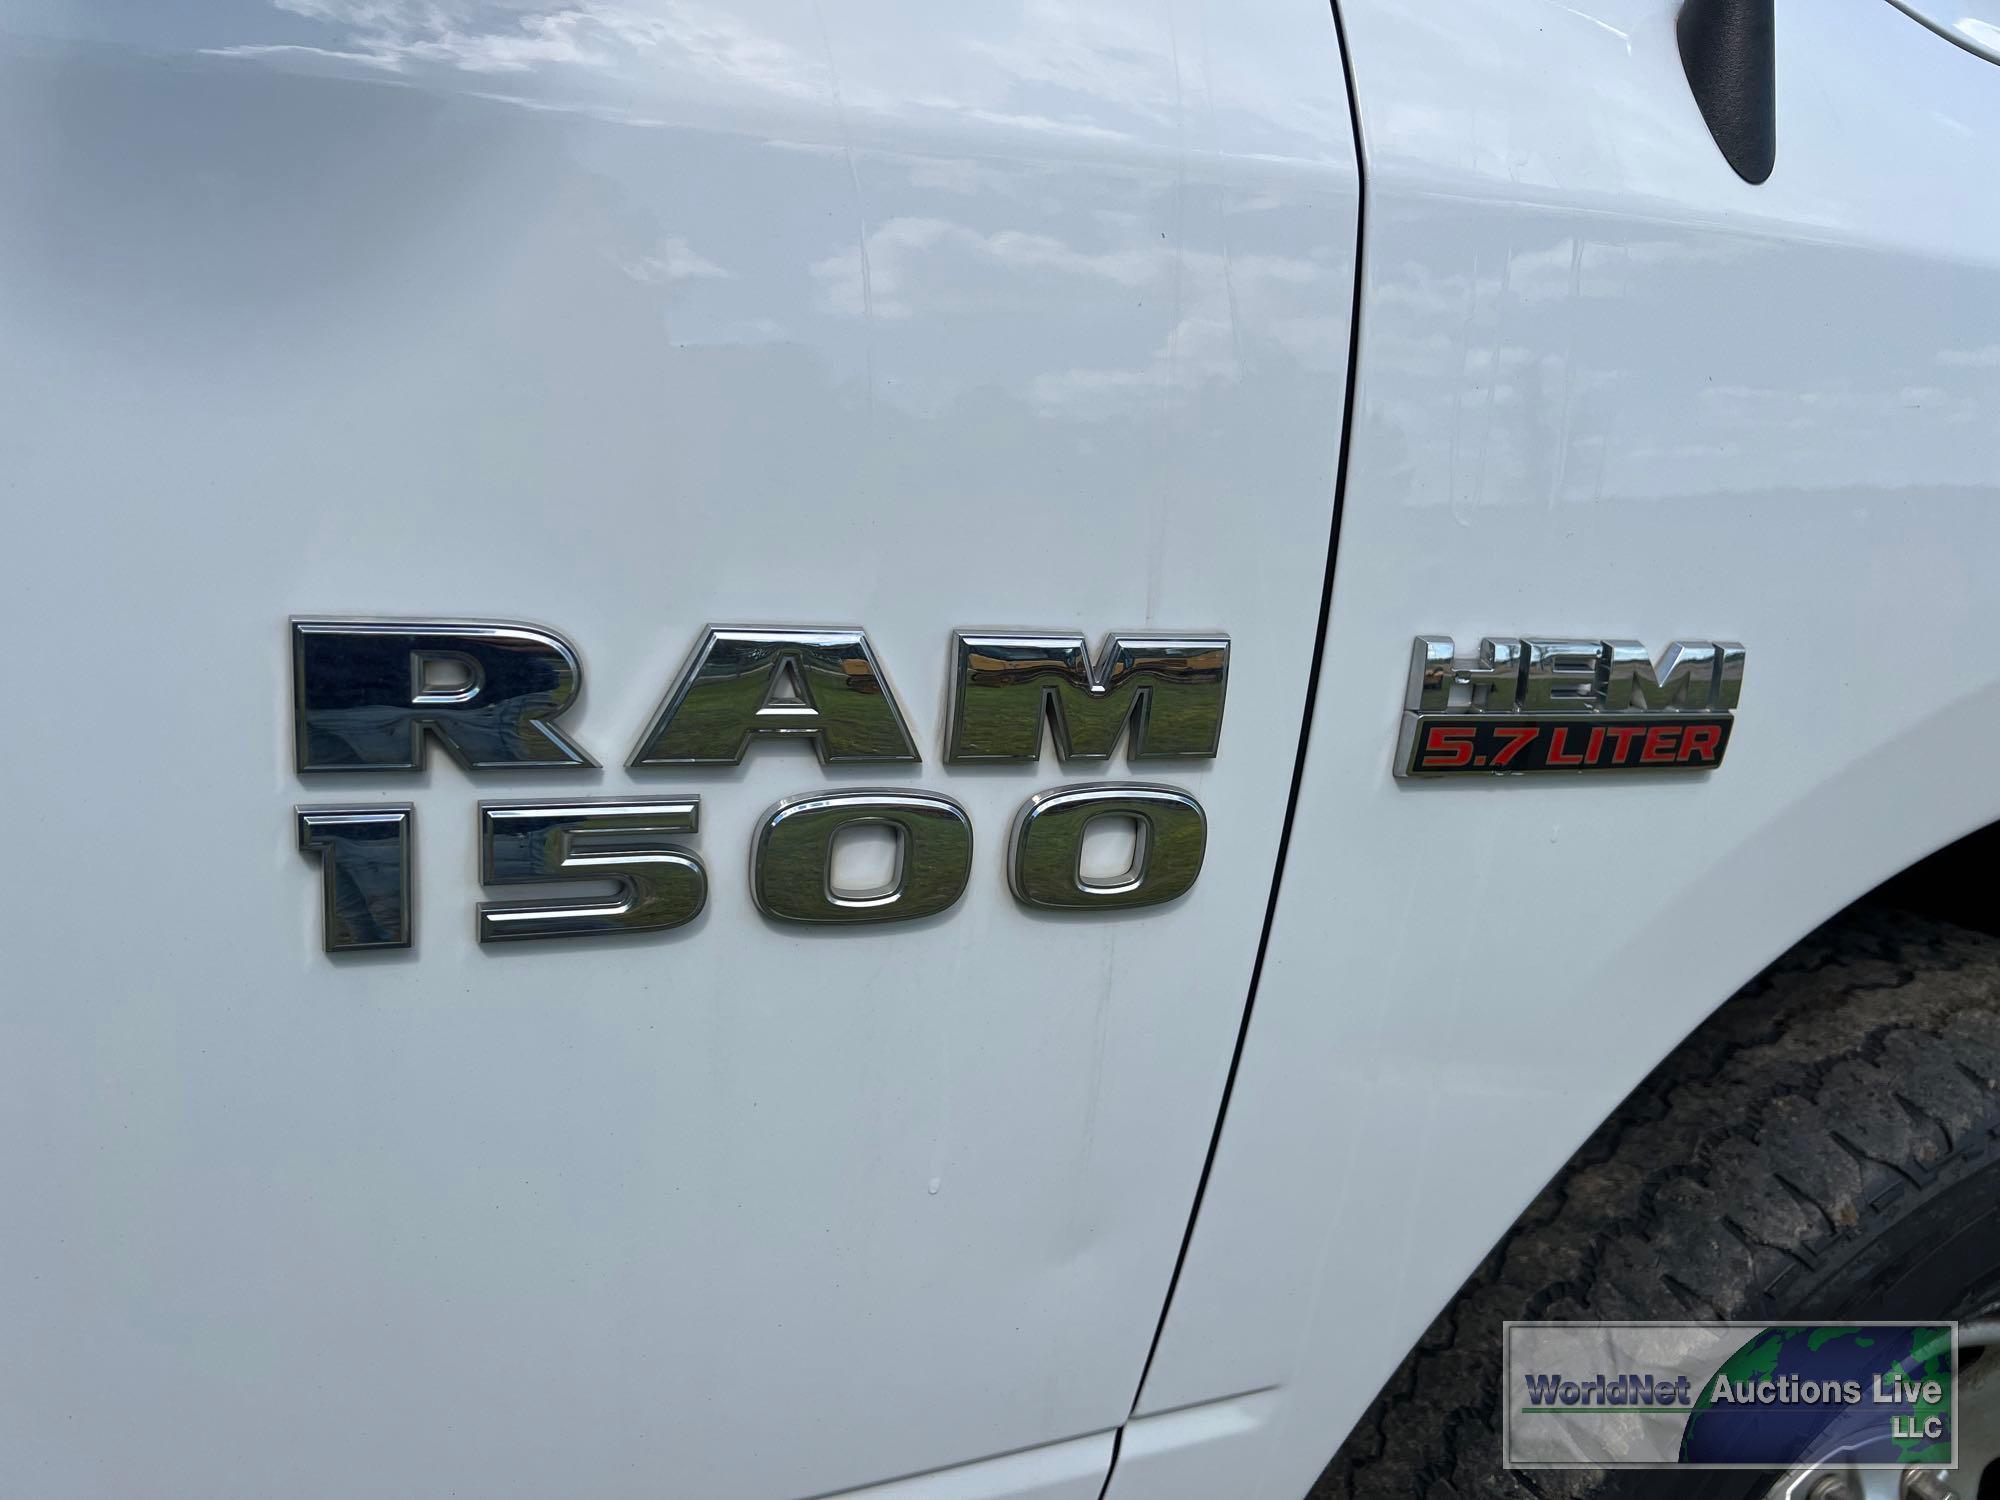 2014 RAM 1500 PICKUP TRUCK, VIN # 1C6RR7FT0ES210964